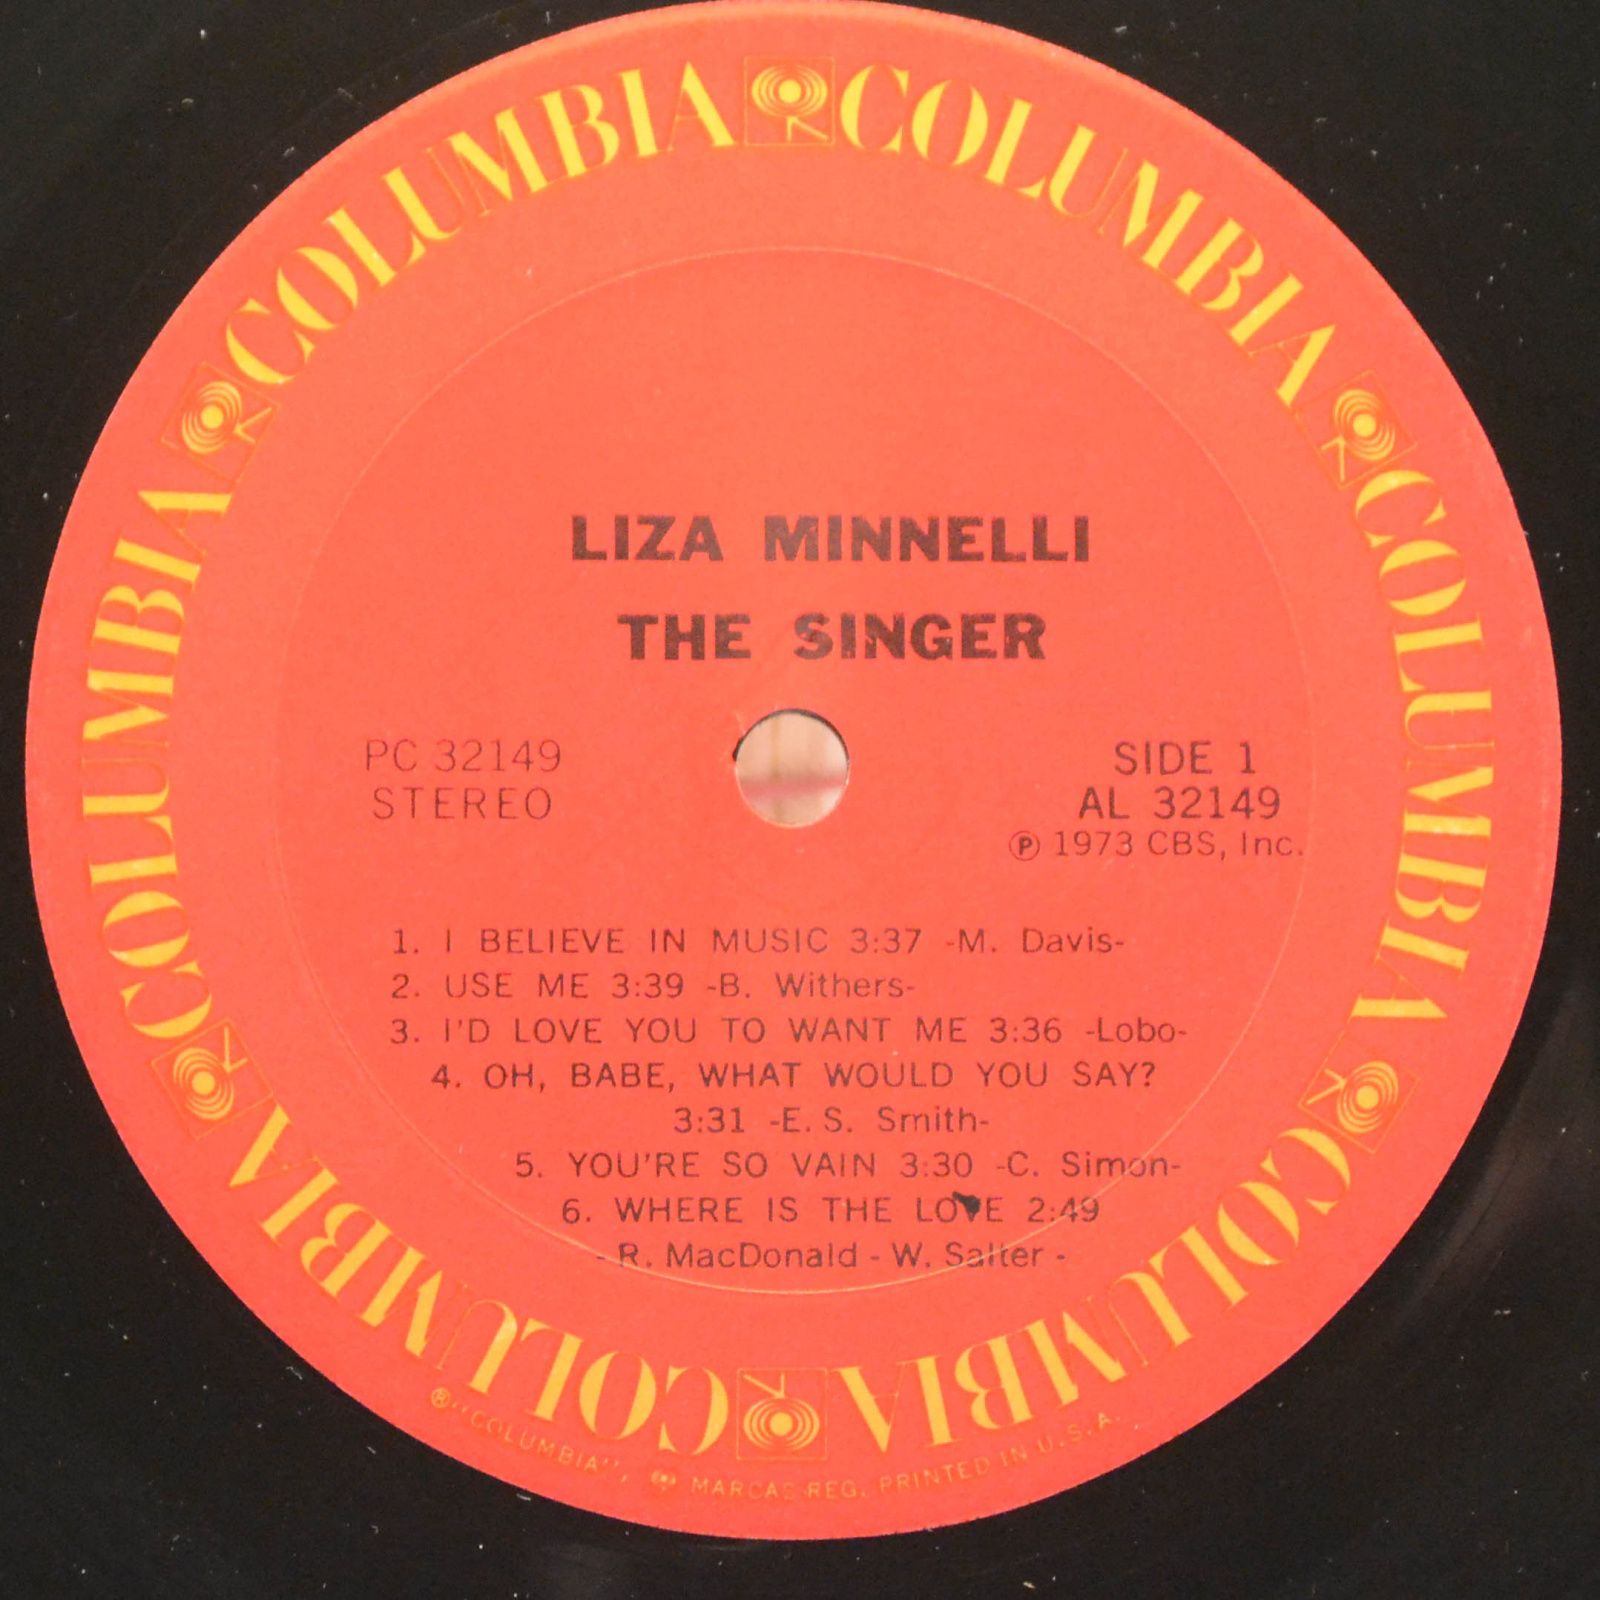 Liza Minnelli — The Singer, 1973